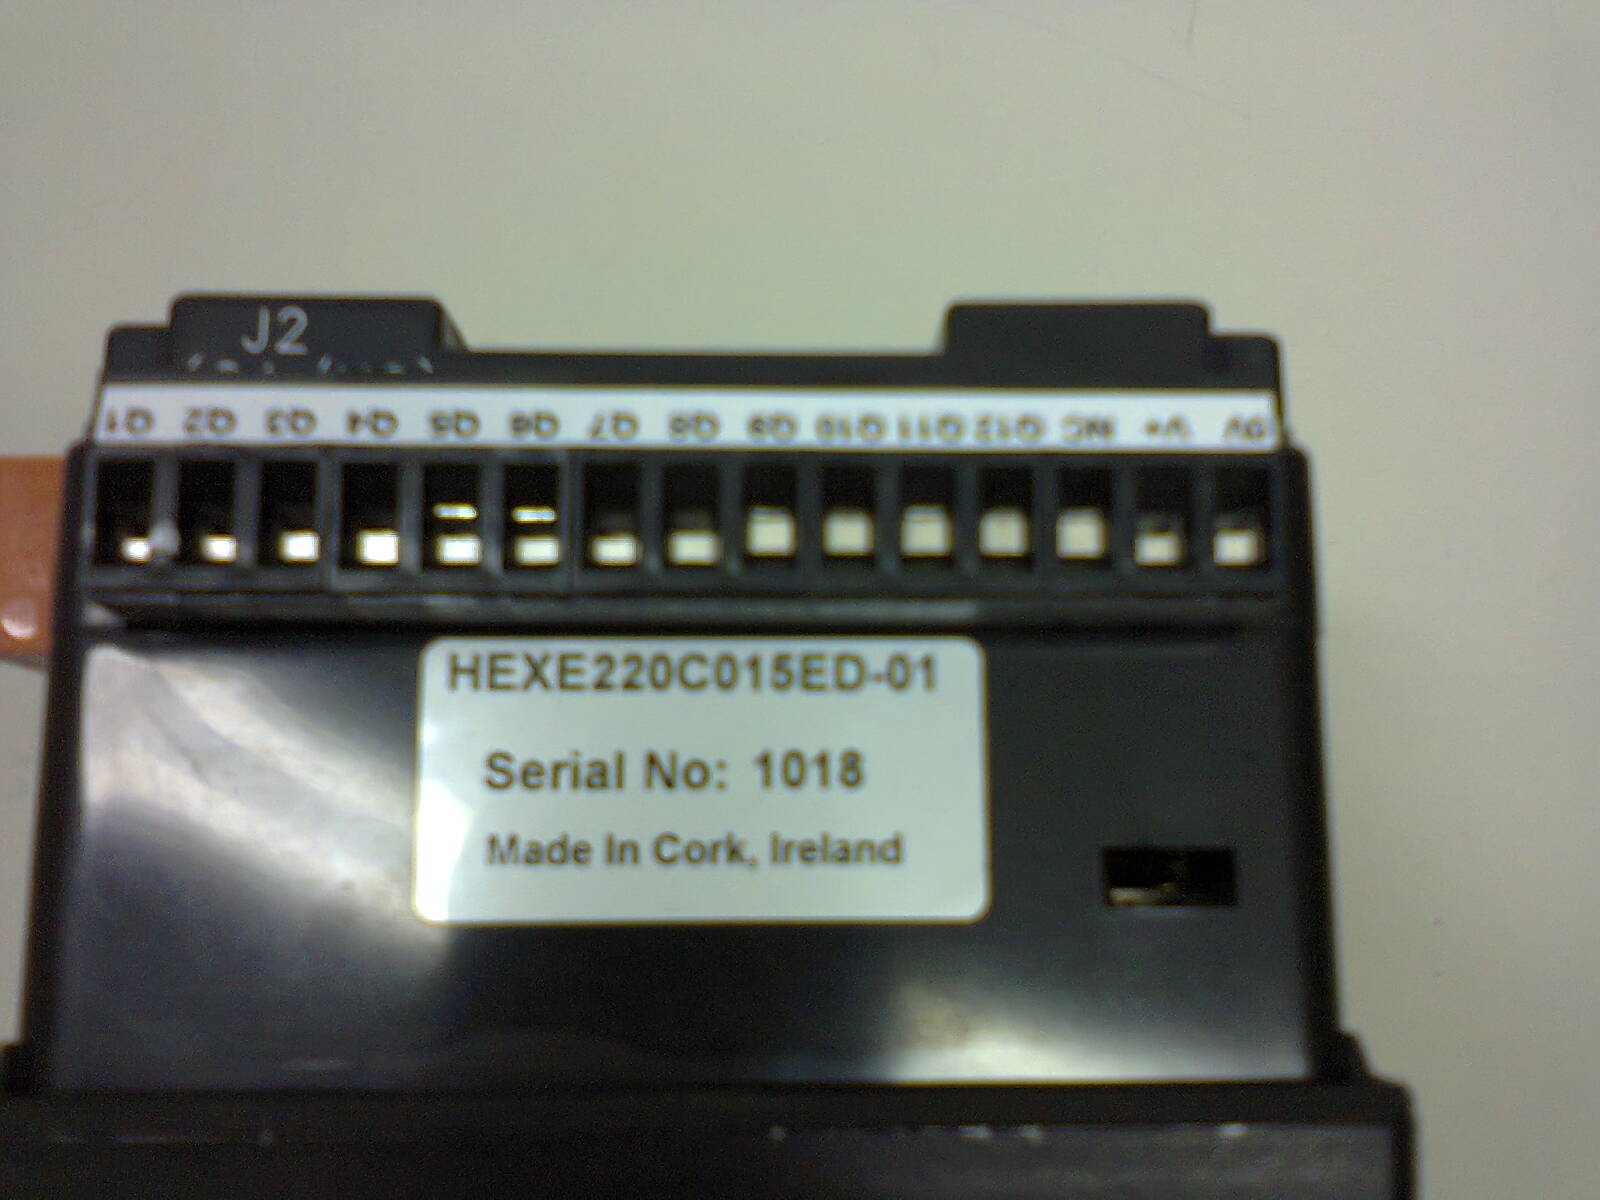 Hexe220C15ED-01 HEXE Cork , ireland controller.